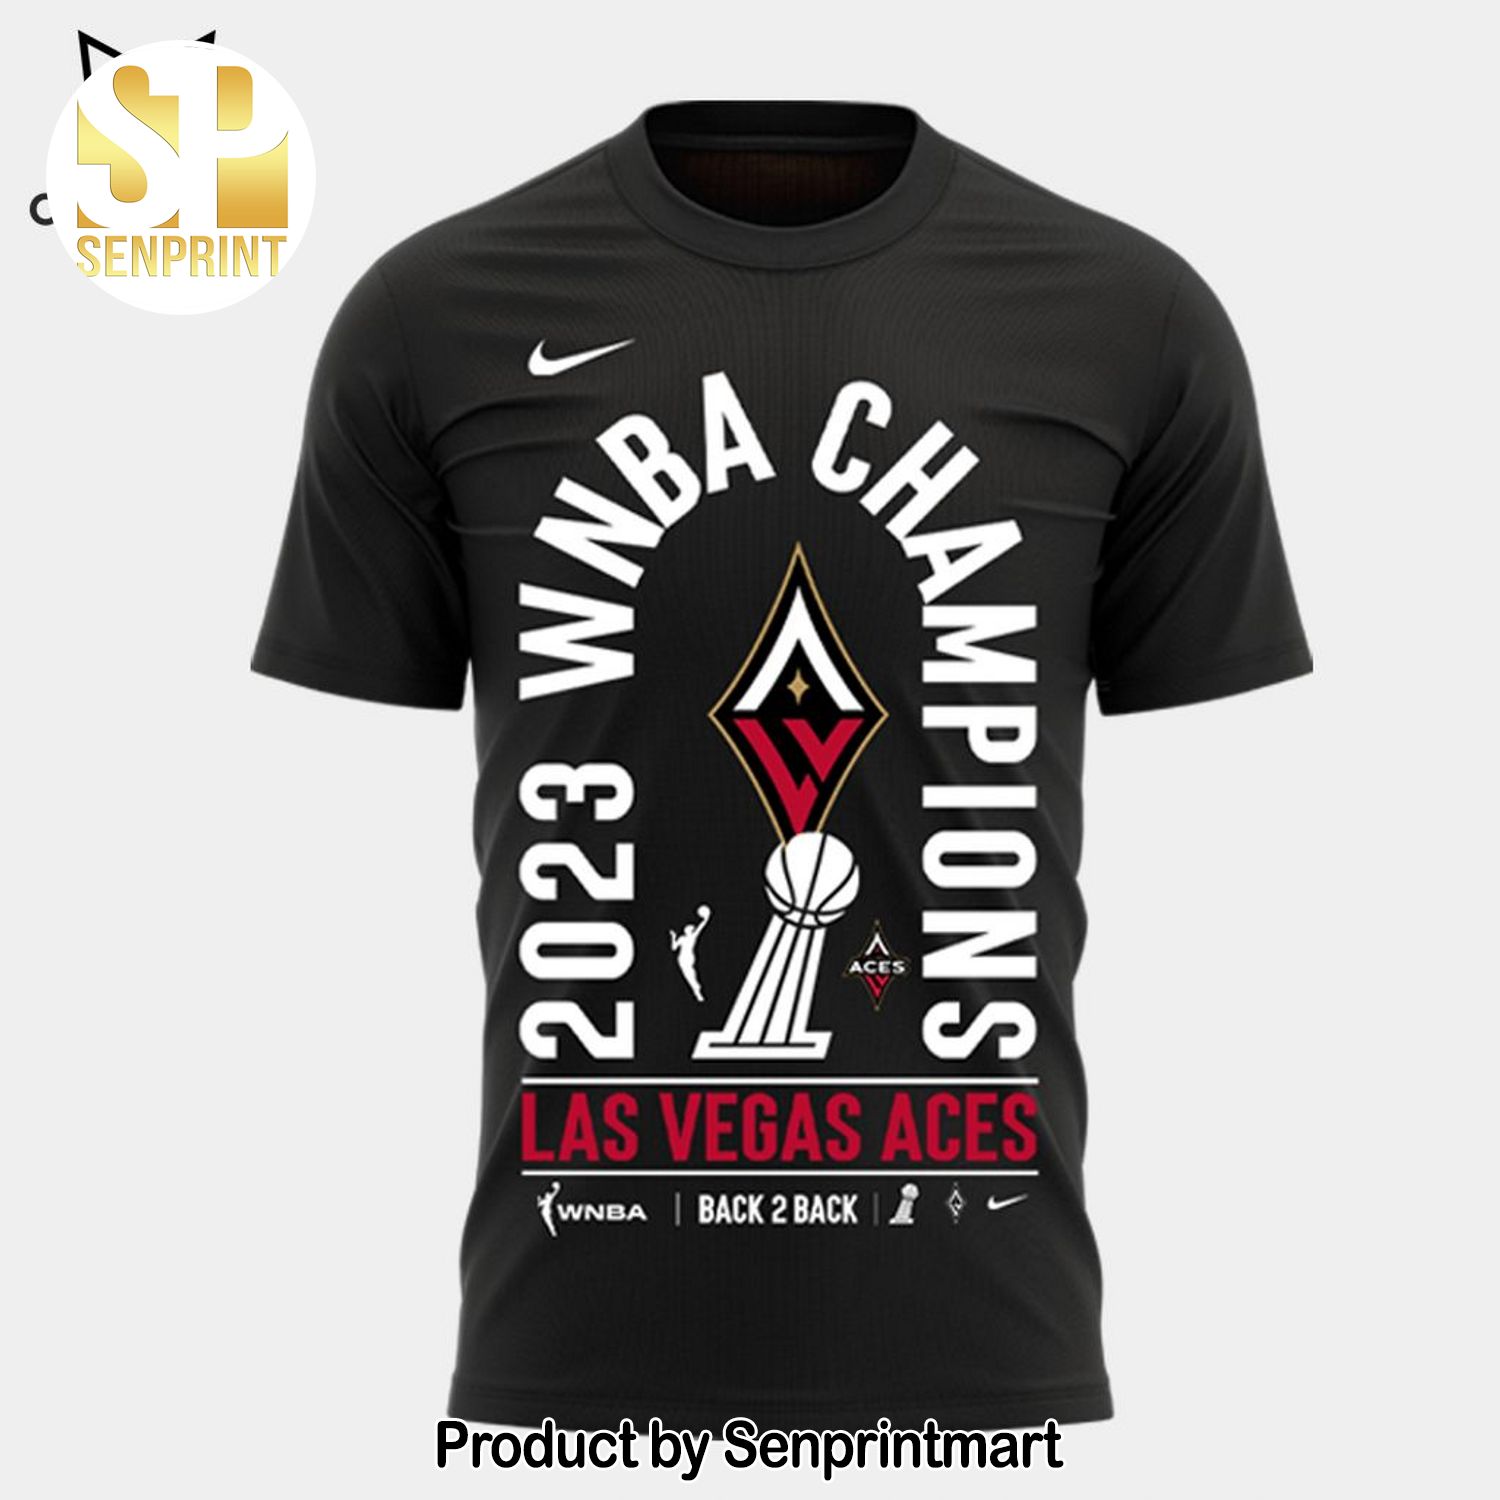 2023 WNBA Champions Las Vegas Aces Full Printing 3D Shirt